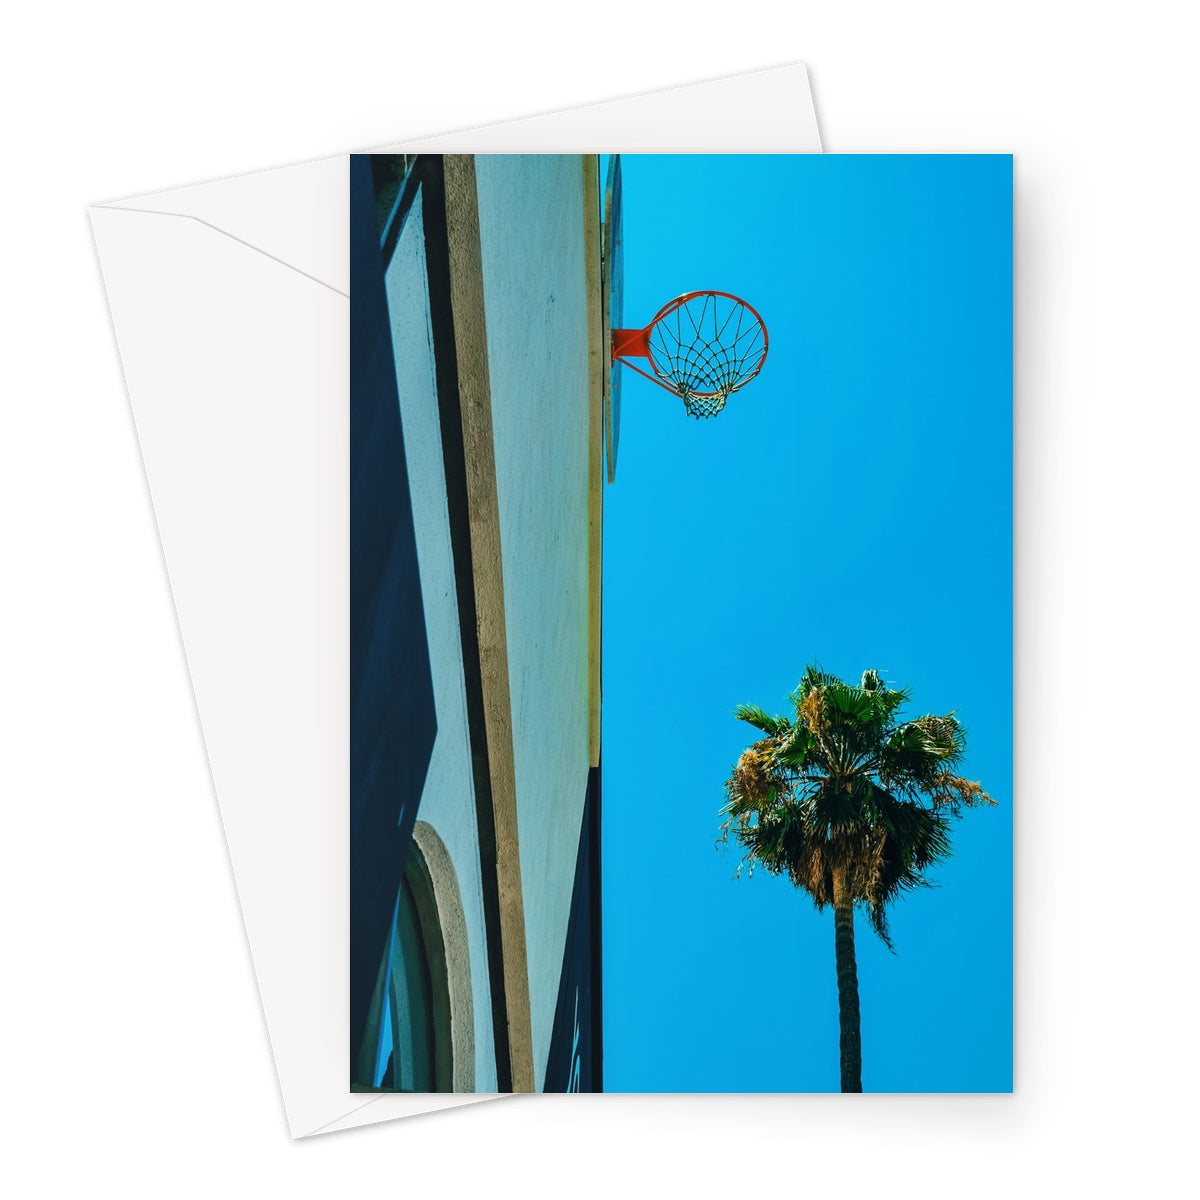 Taking Shots Vol.2 #8 - Los Angeles, CA - Greeting Card